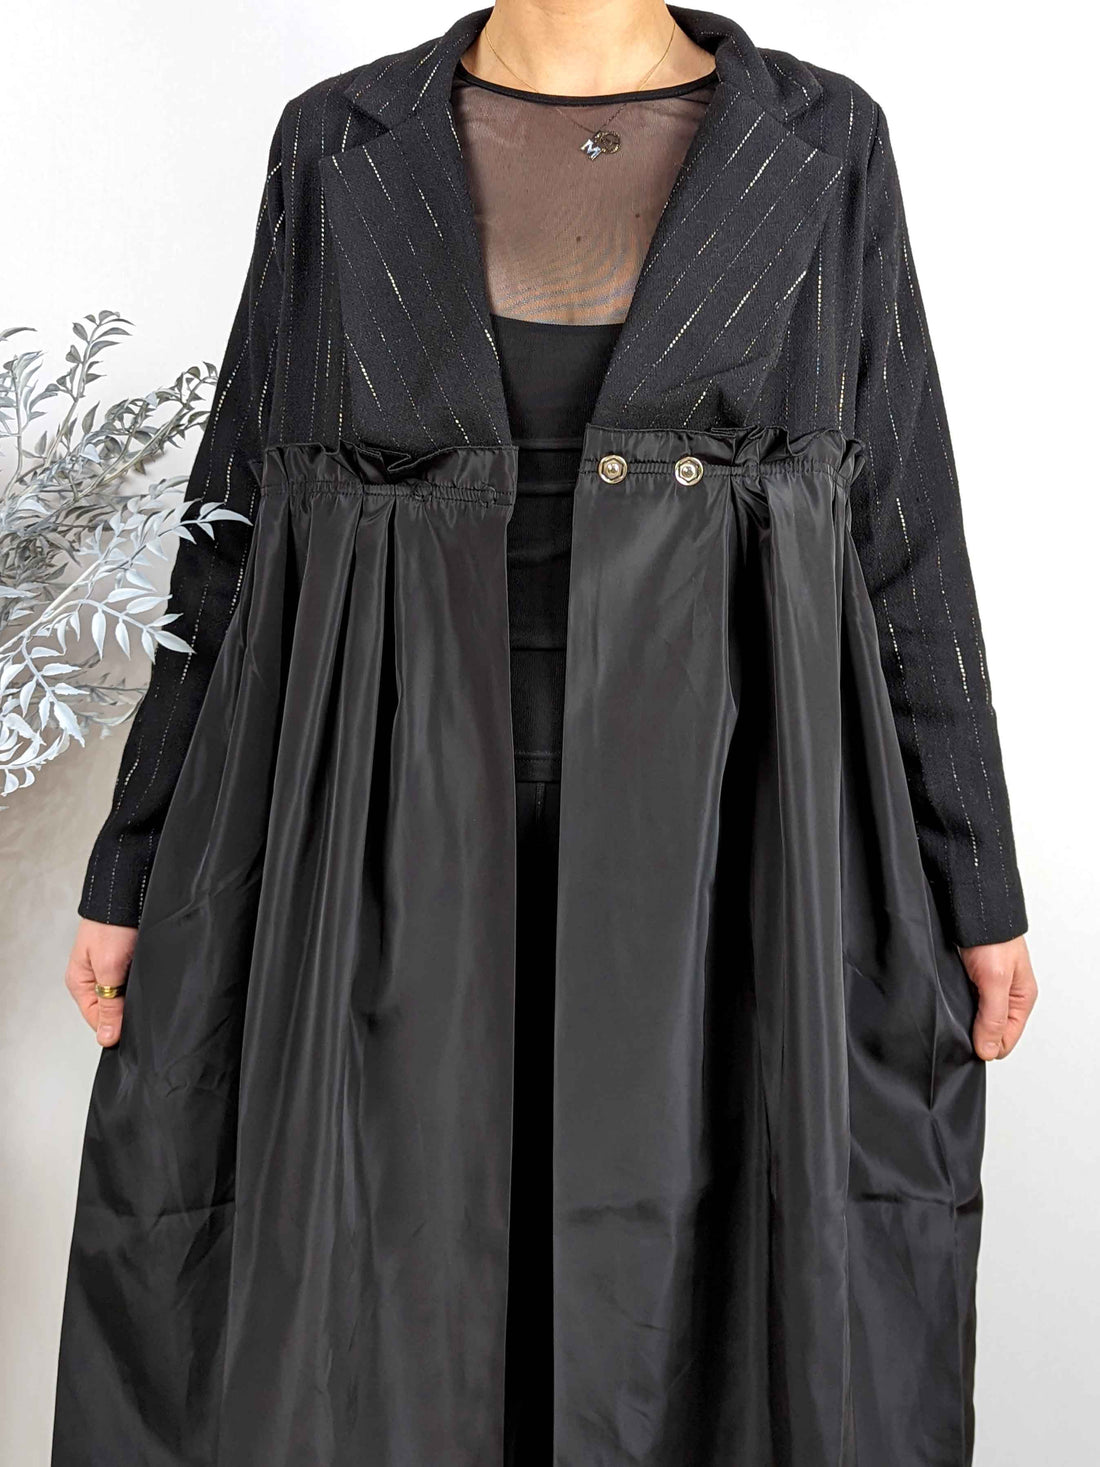 Amici Dust Coat Pleated Coat Dress - BLACK PINSTRIPE